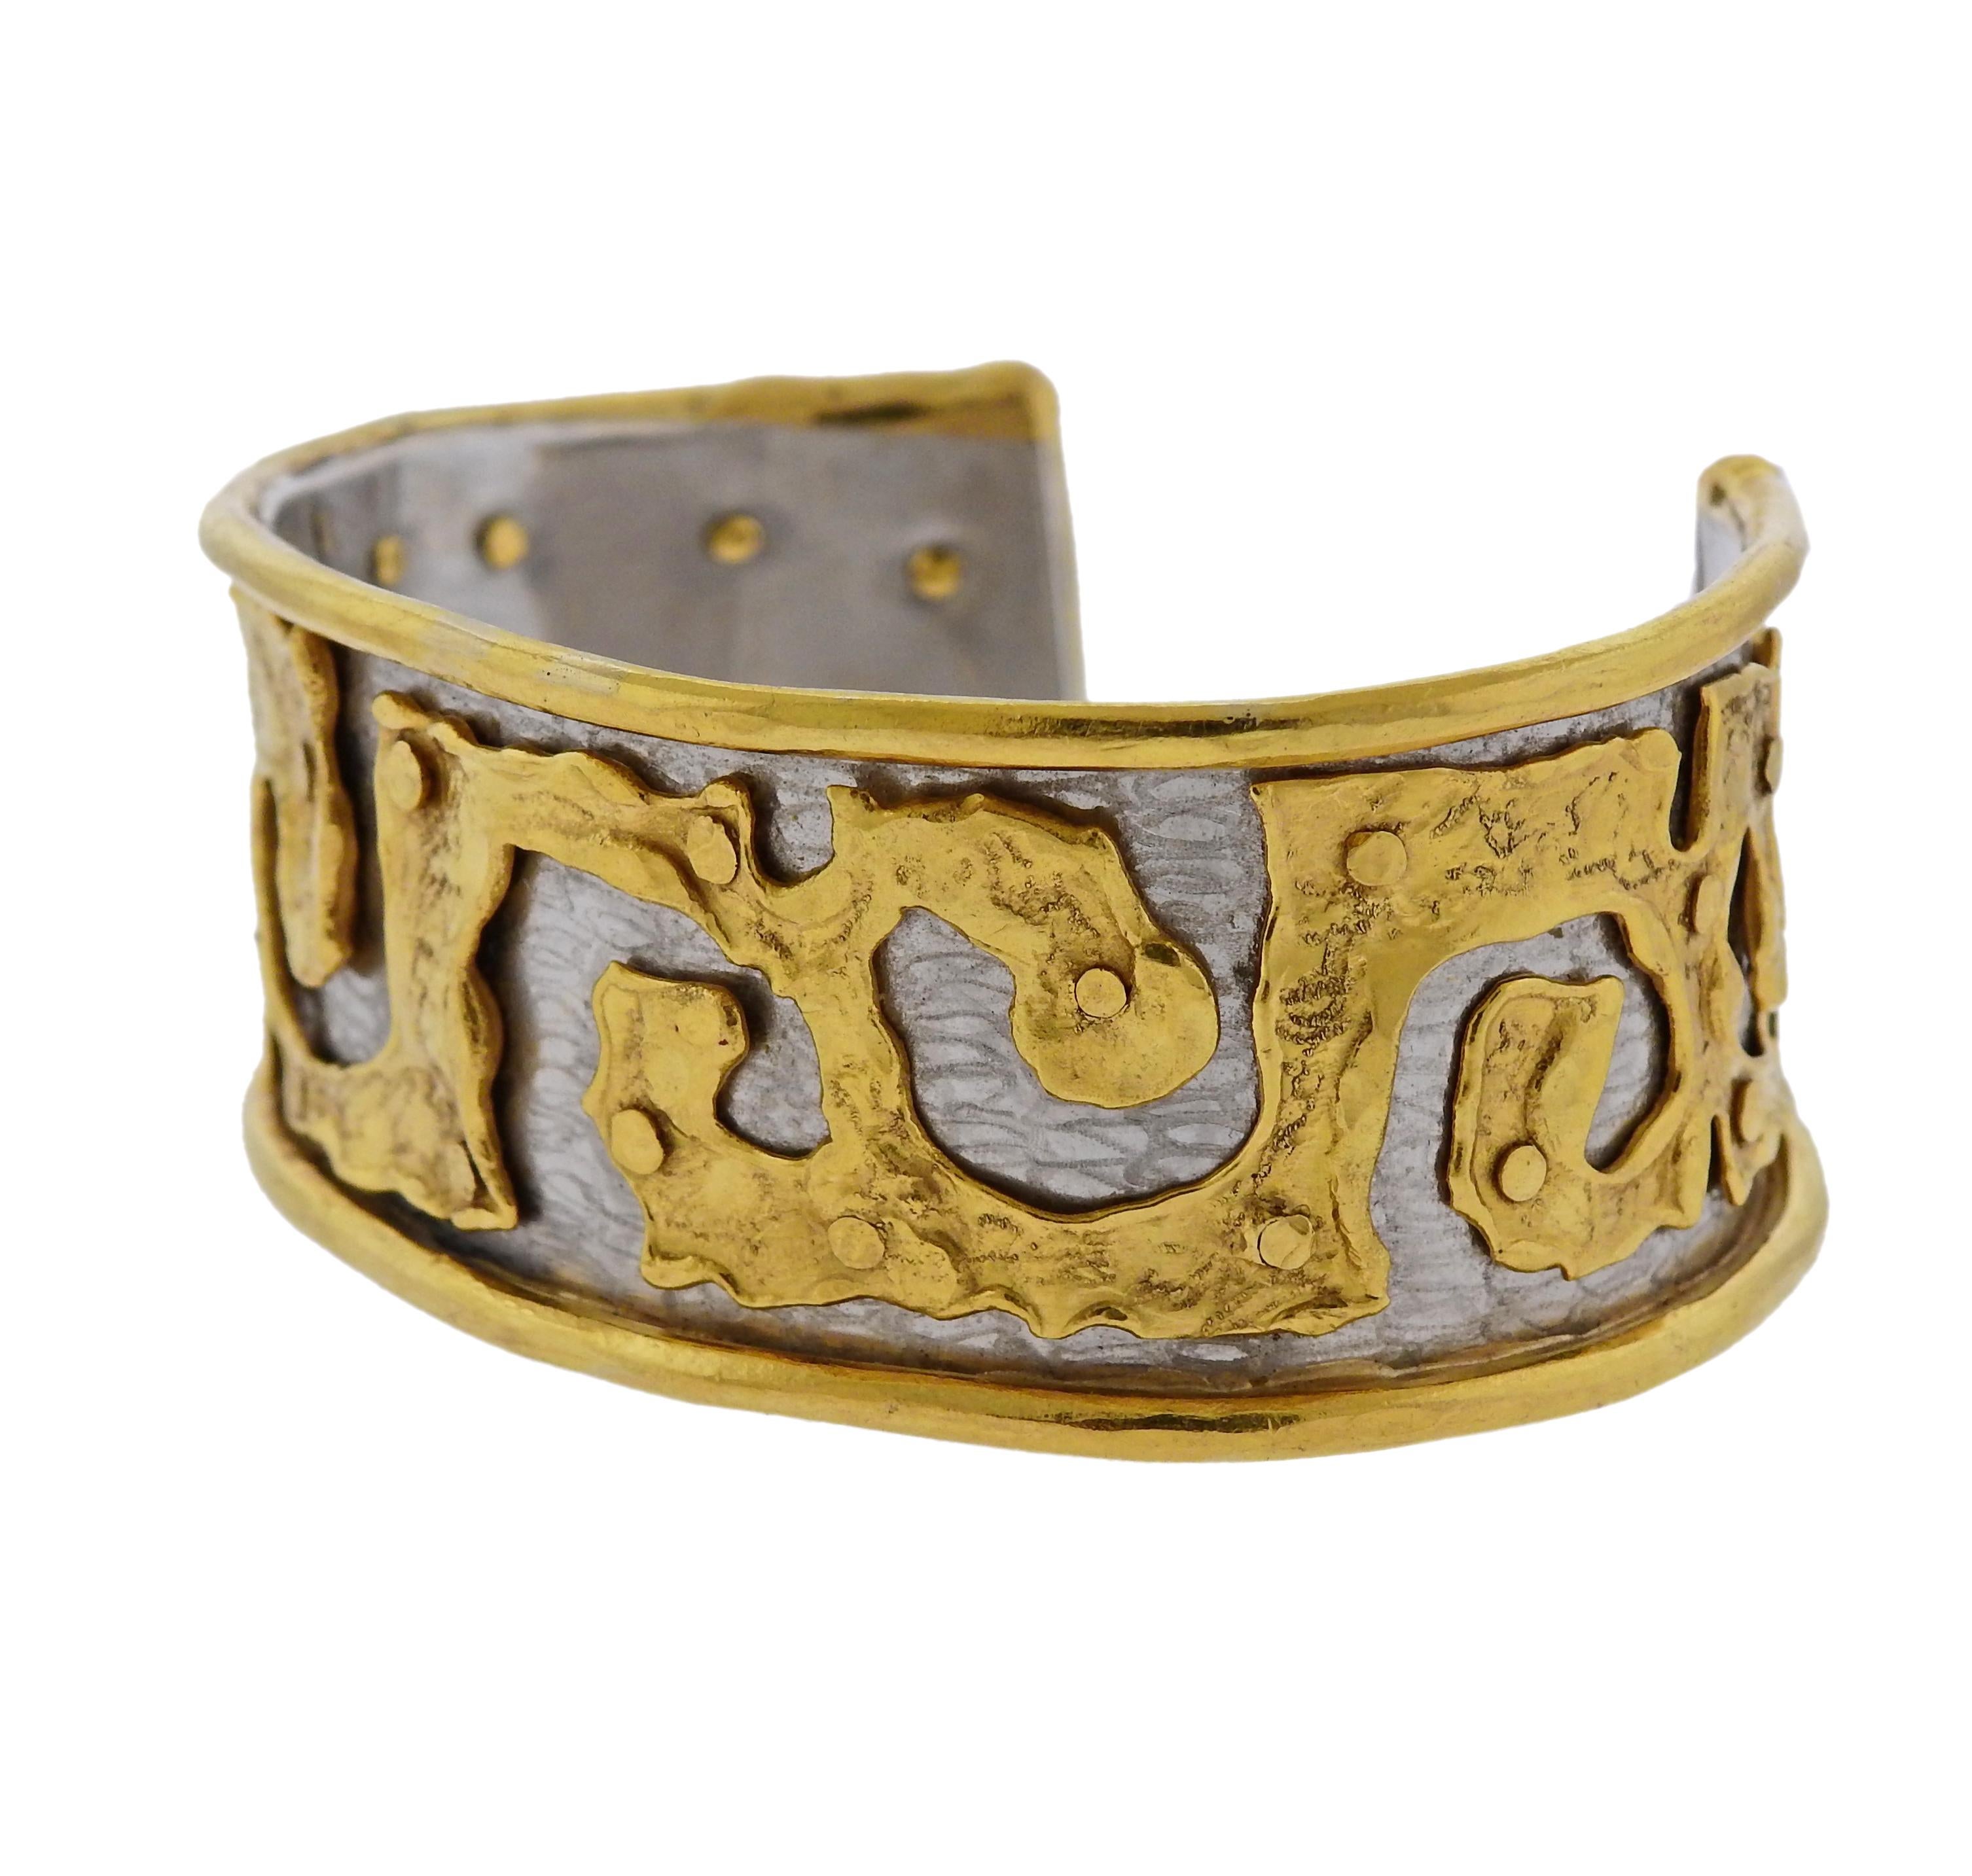 Impressive 22k gold and platinum cuff bracelet, designed by Jean Mahie. Bracelet will fit up to 8.5